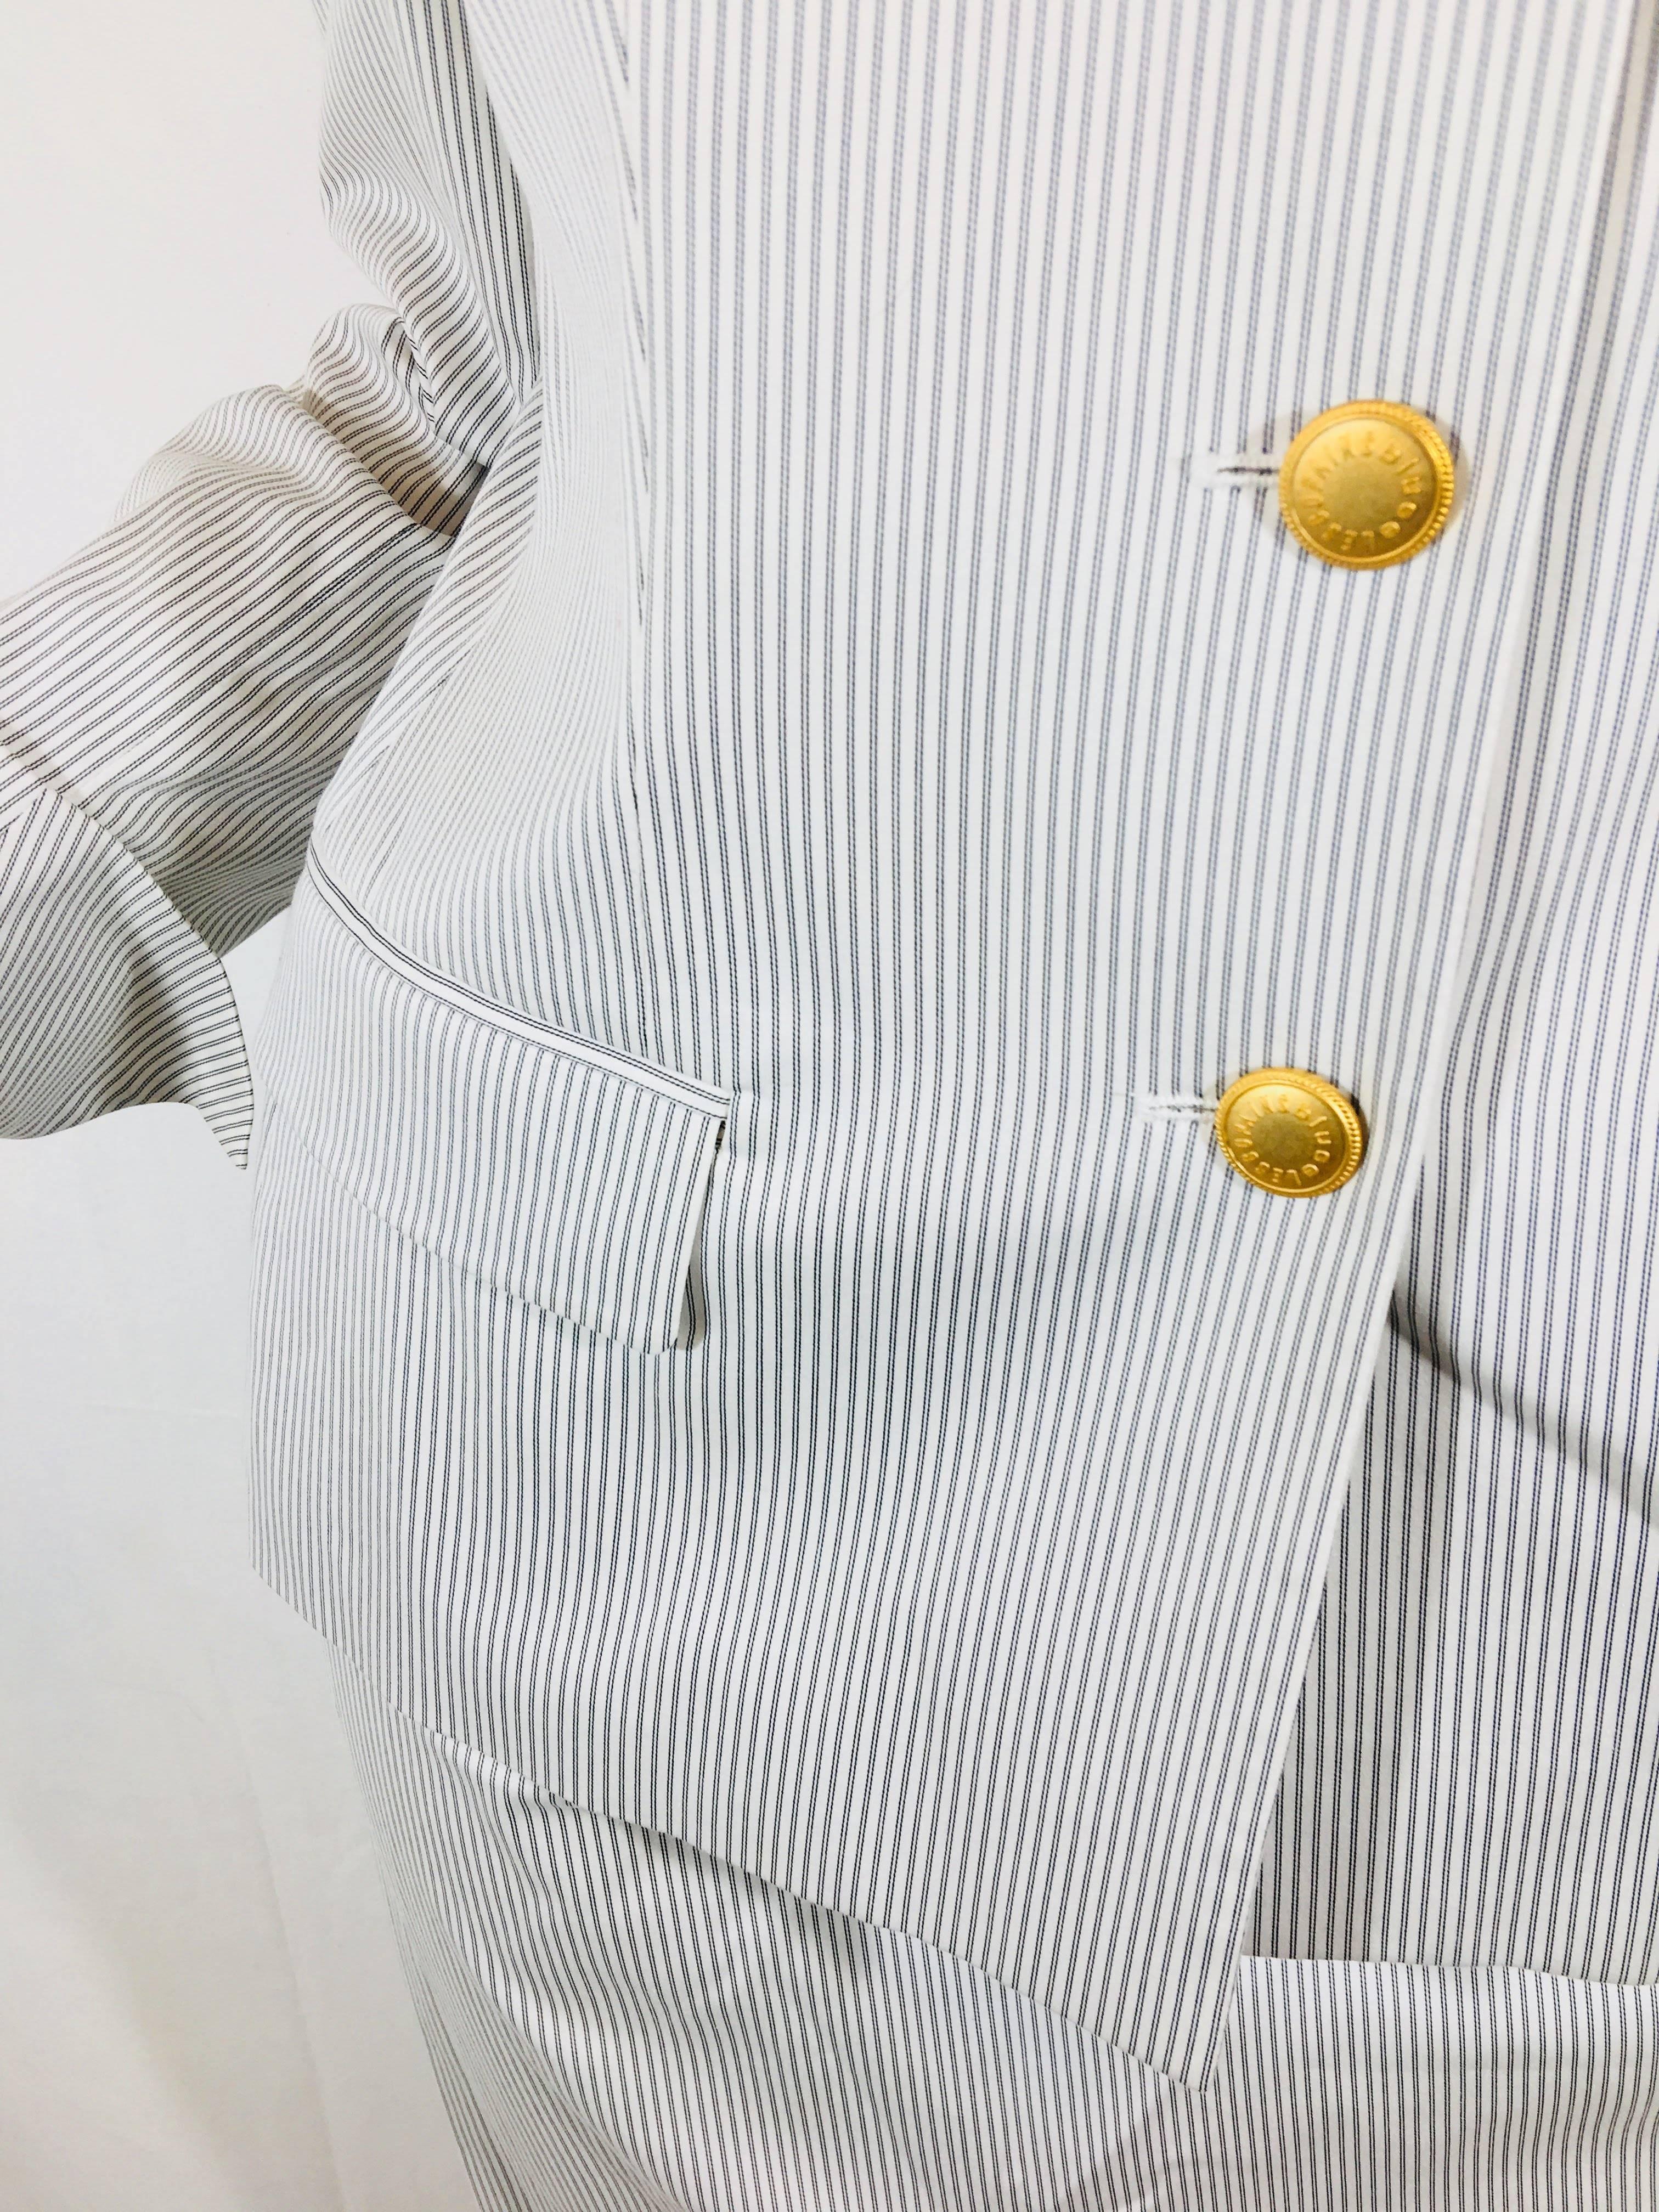 Les Copains 2 Piece Skirt Suit. Four Gold Button Closure Blazer with Pencil Skirt in White/Navy Seersucker Cotton.